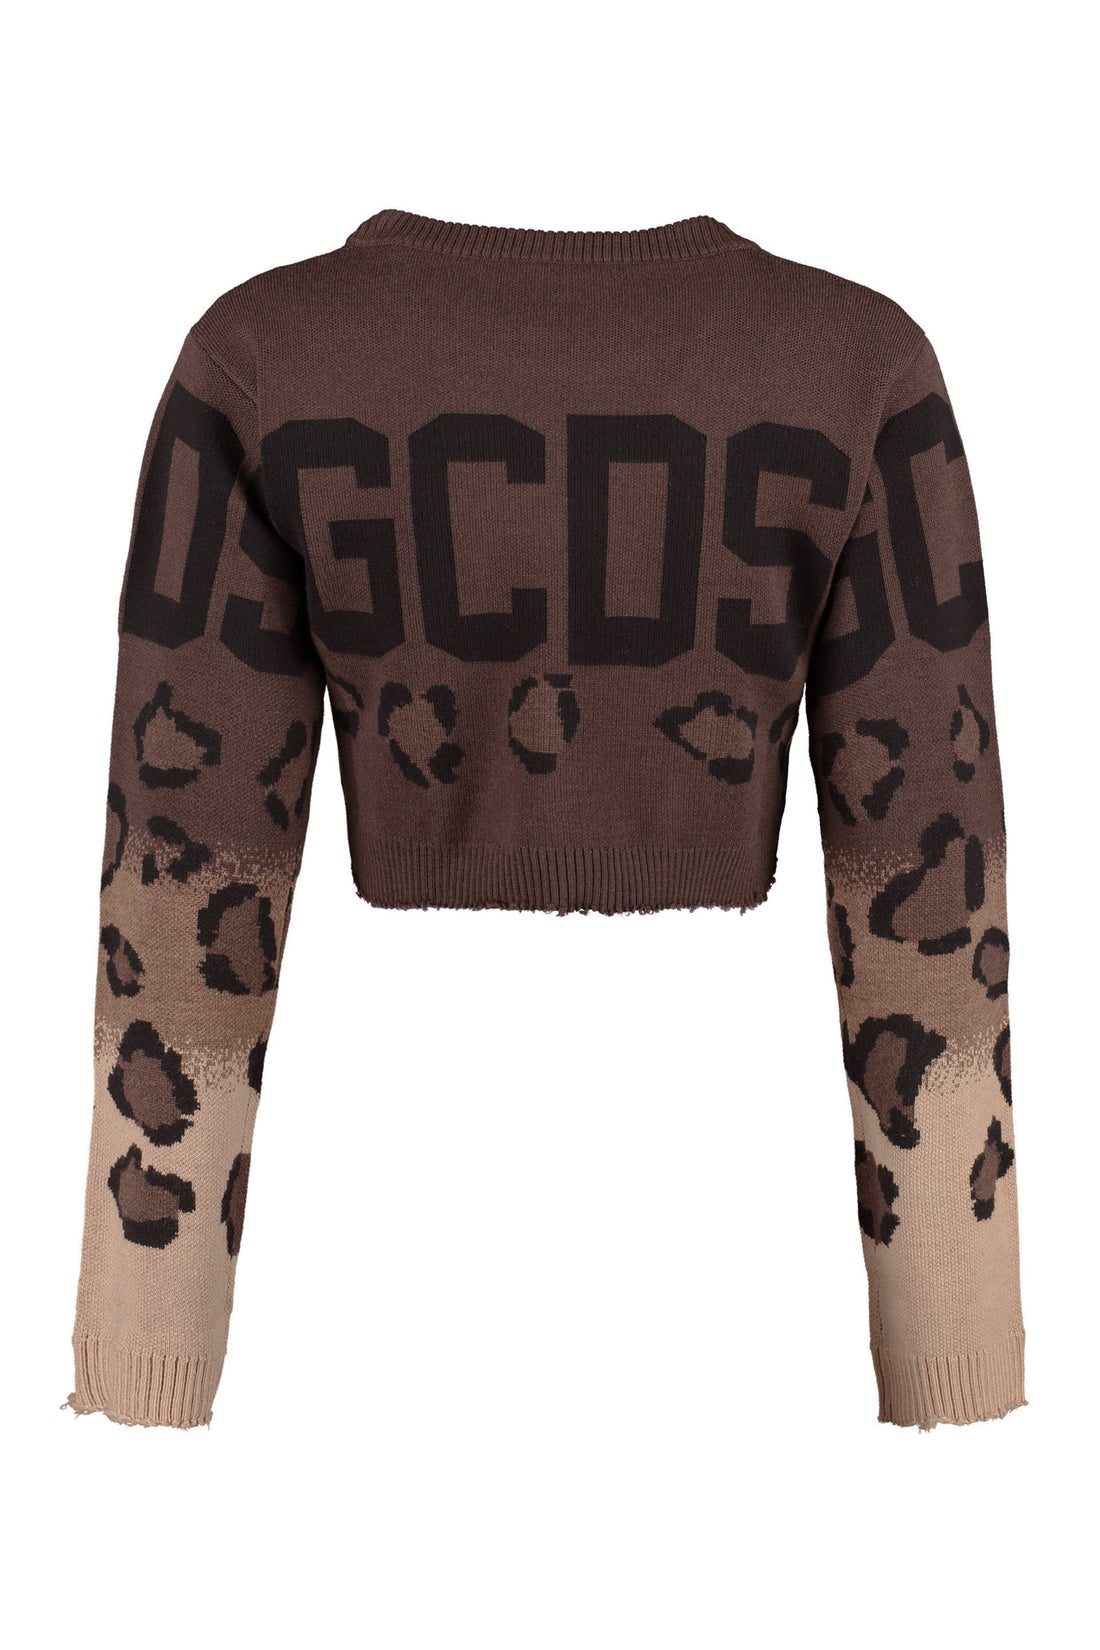 GCDS-OUTLET-SALE-Wool blend sweater-ARCHIVIST